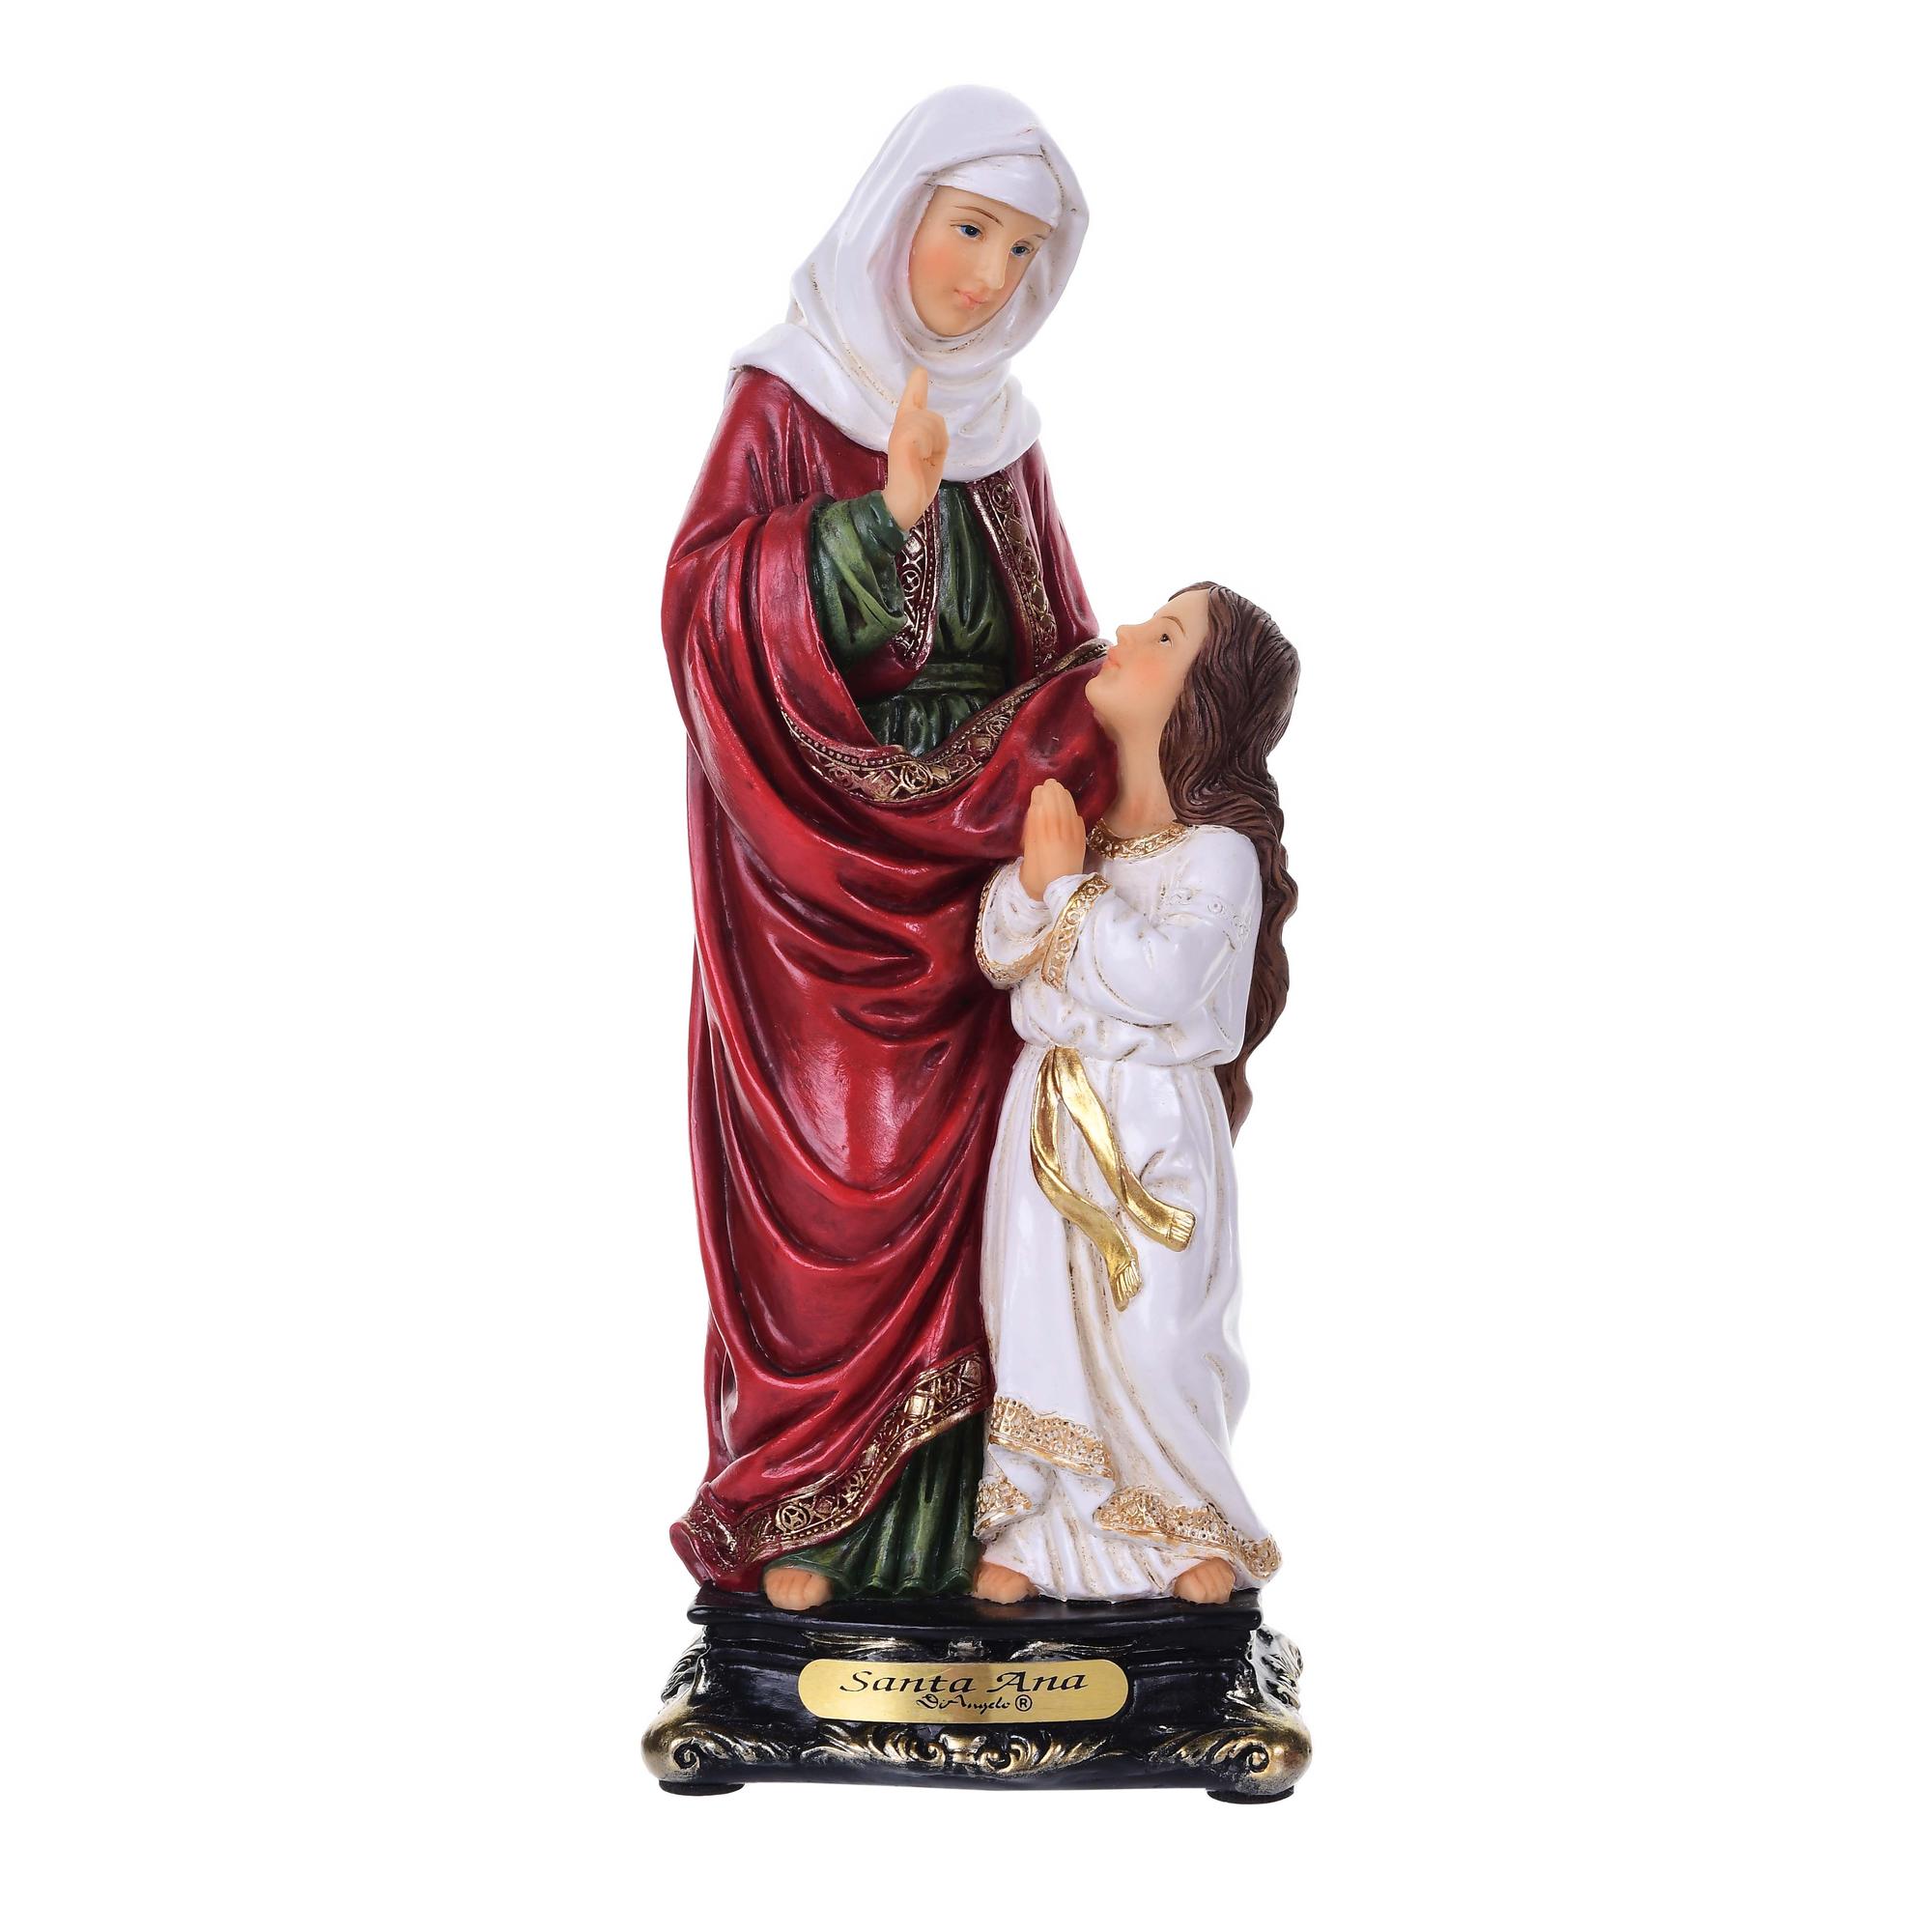 POLY 8 inch figurine - SANTA ANA - 560-337524